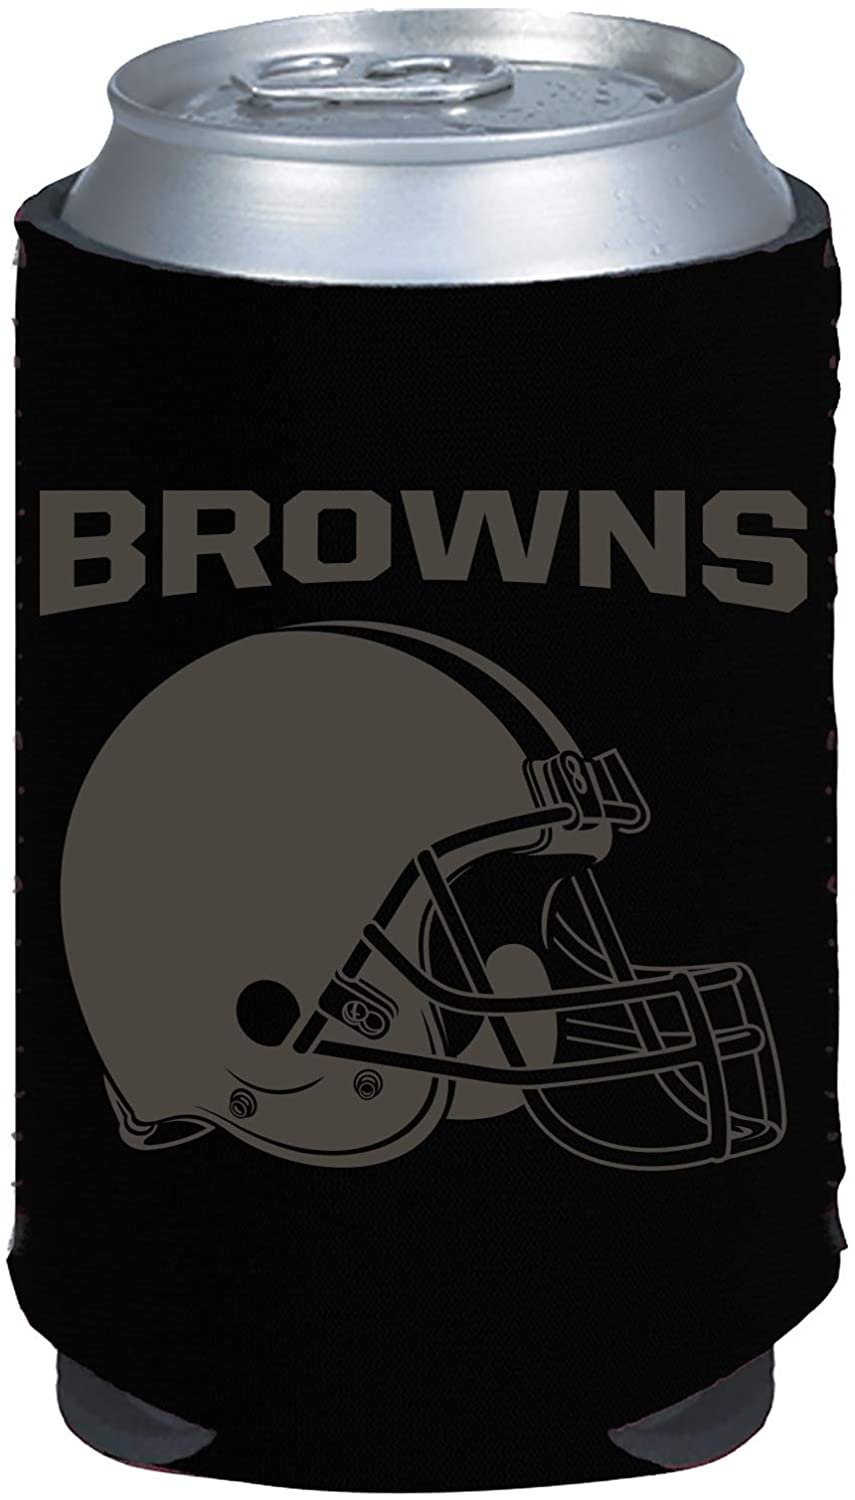 Cleveland Browns 2-Pack Tonal Black Design CAN Beverage Insulator Neoprene Holder Cooler Coolie Football